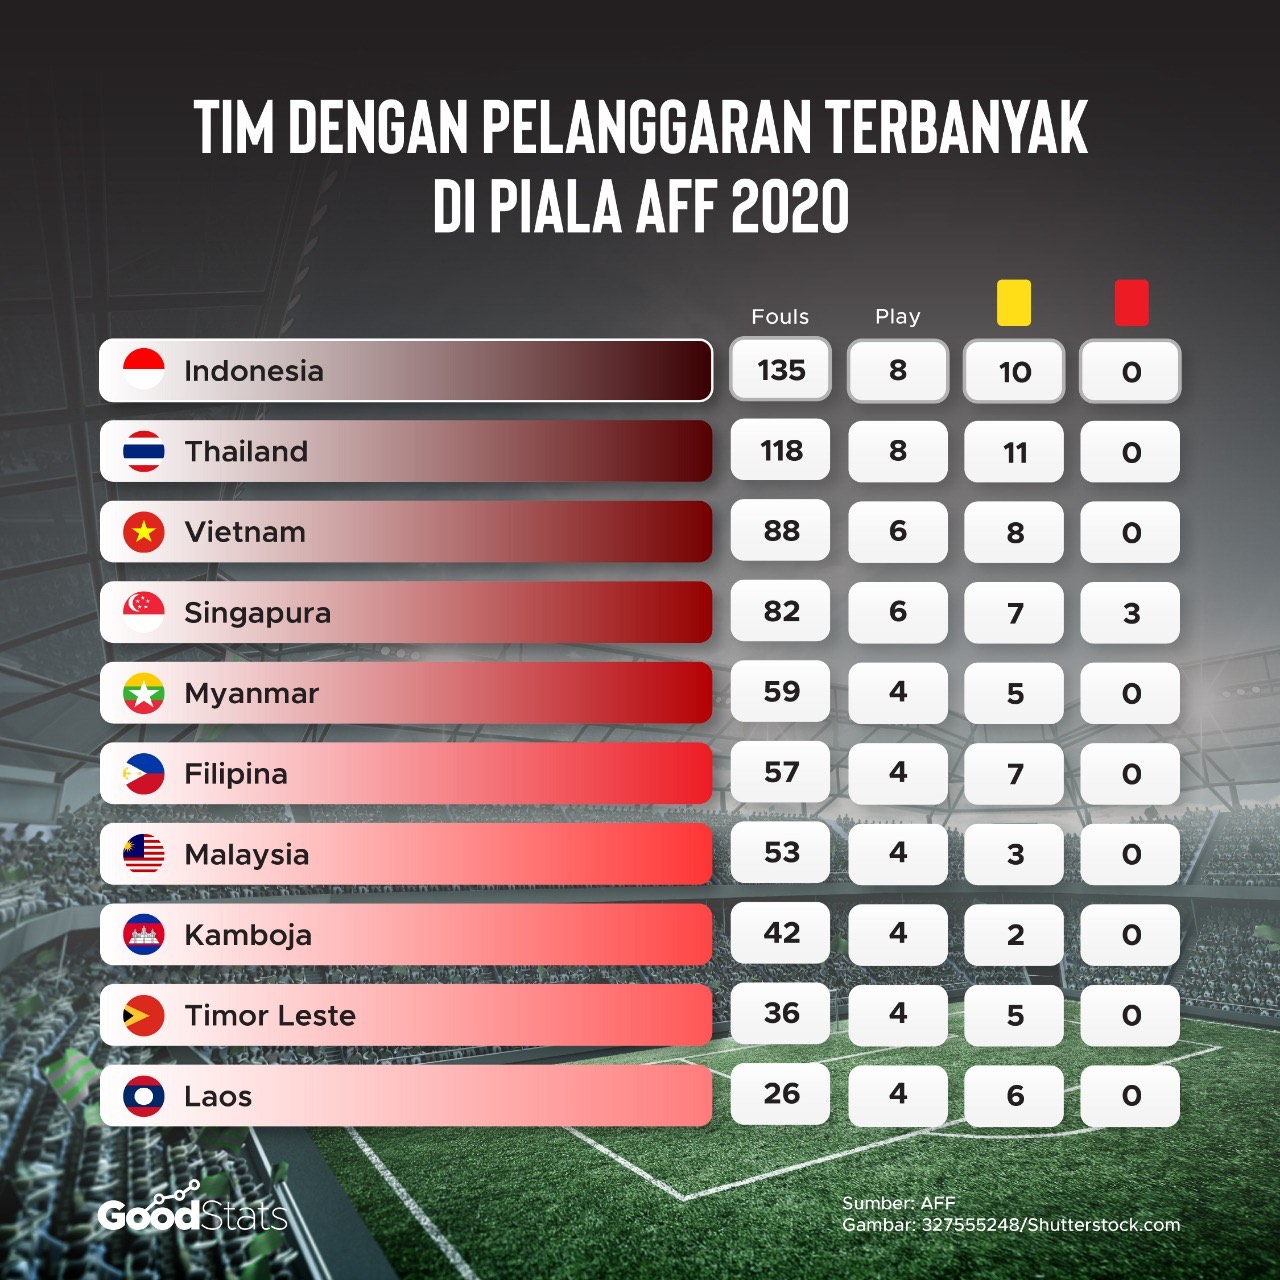 Tim dengan pelanggaran terbanyak di Piala AFF 2020 | GoodStats